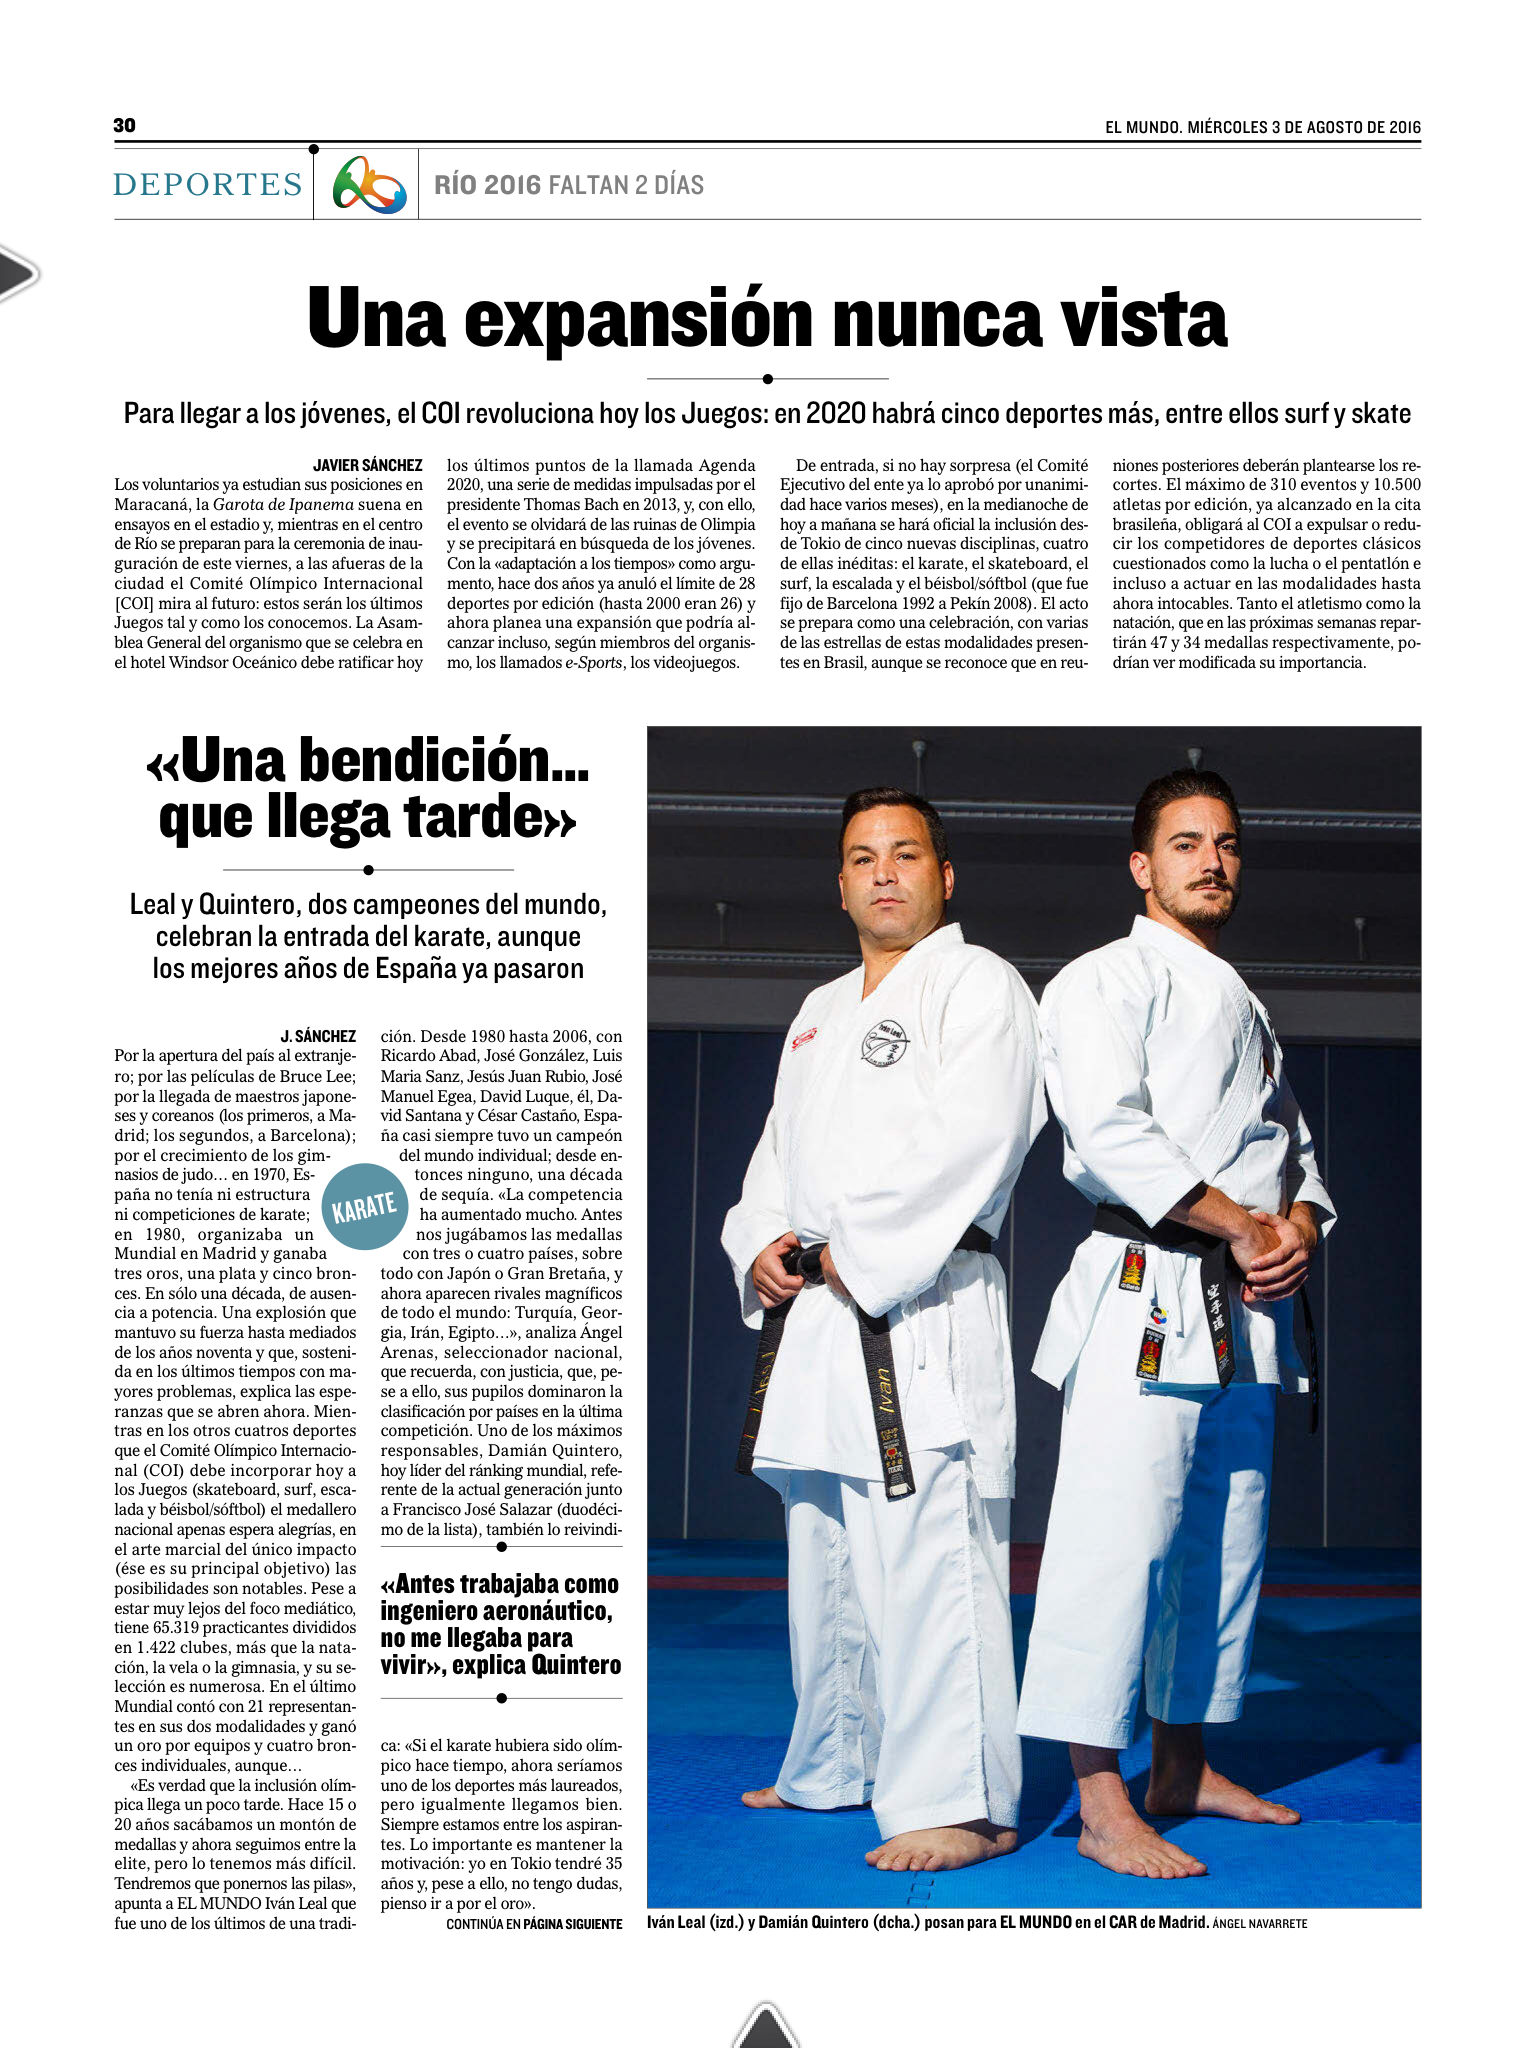 damian-quintero-noticia-karate-olimpico-bendicion